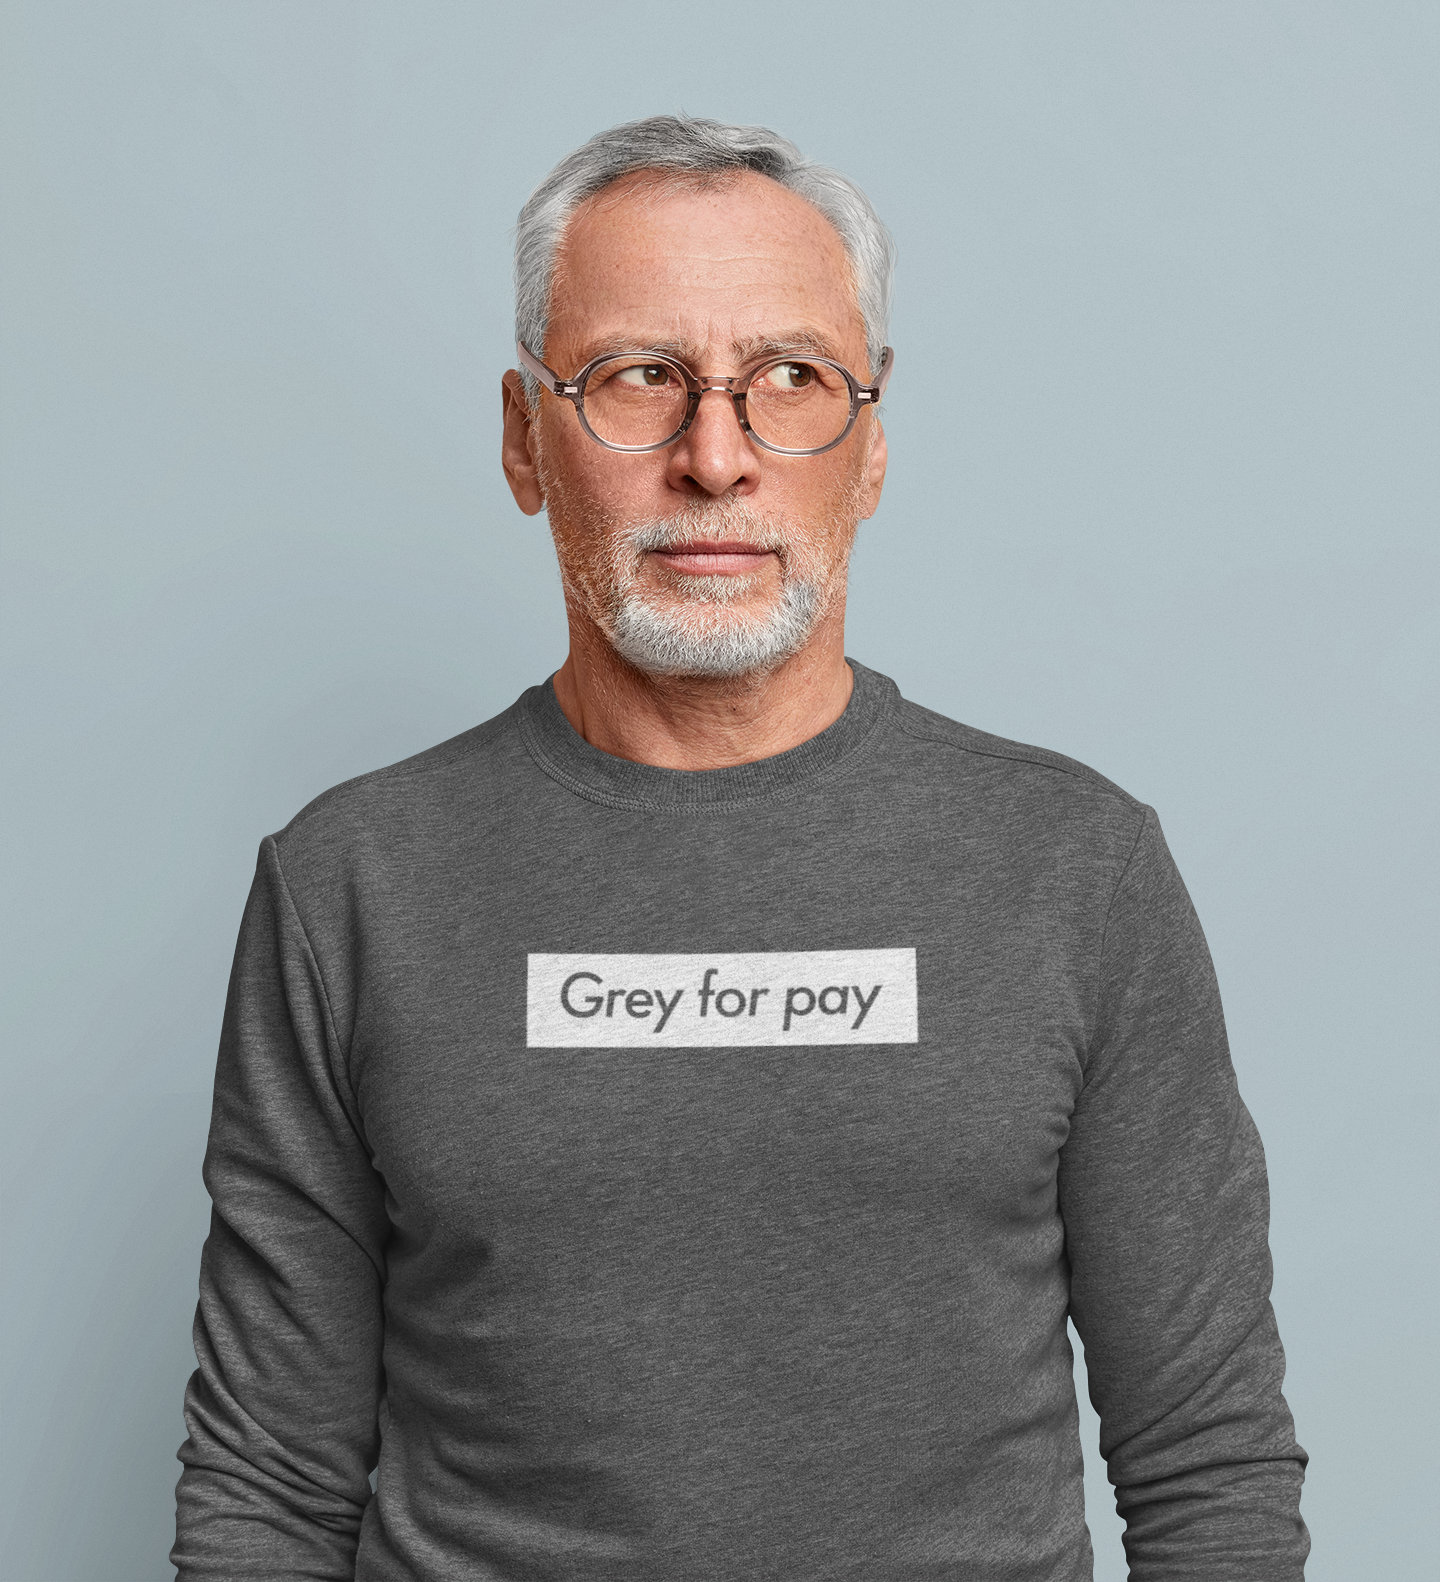 Mature gay man wearing a sweatshirt reading grey for pay slogan